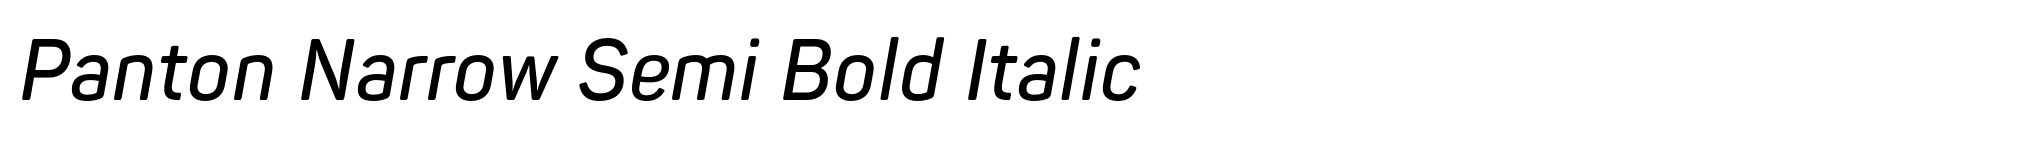 Panton Narrow Semi Bold Italic image